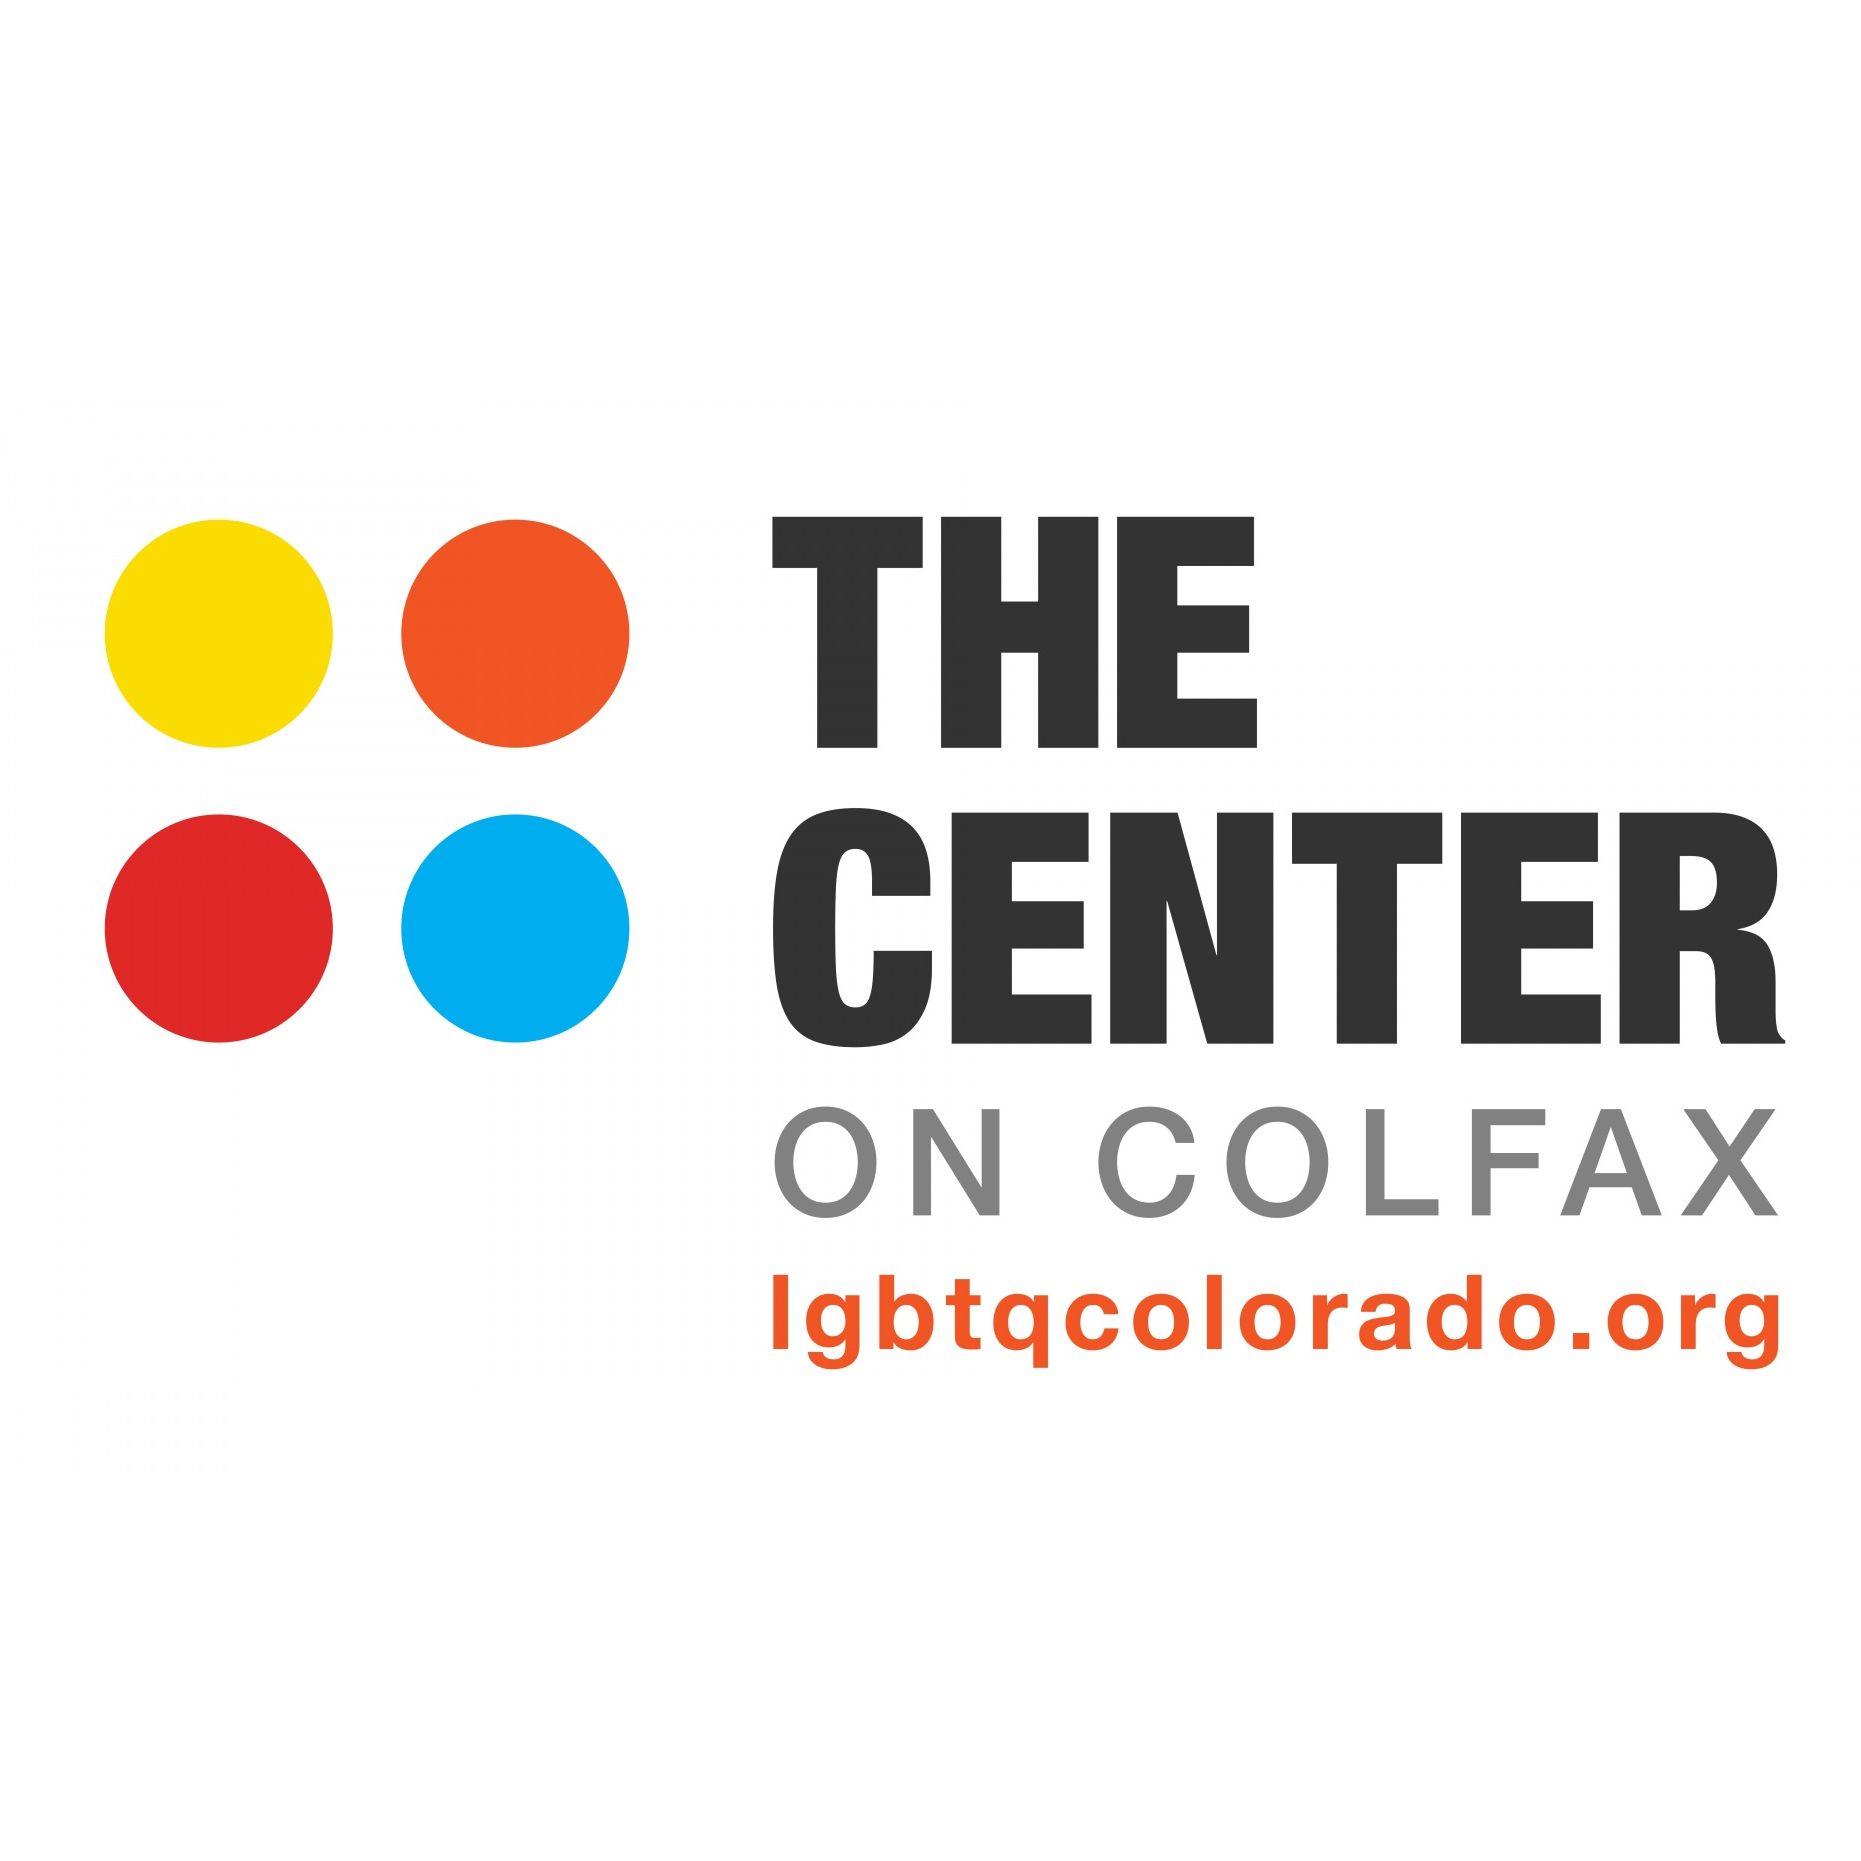 LGBTQ Organization in Denver Colorado - The Center on Colfax